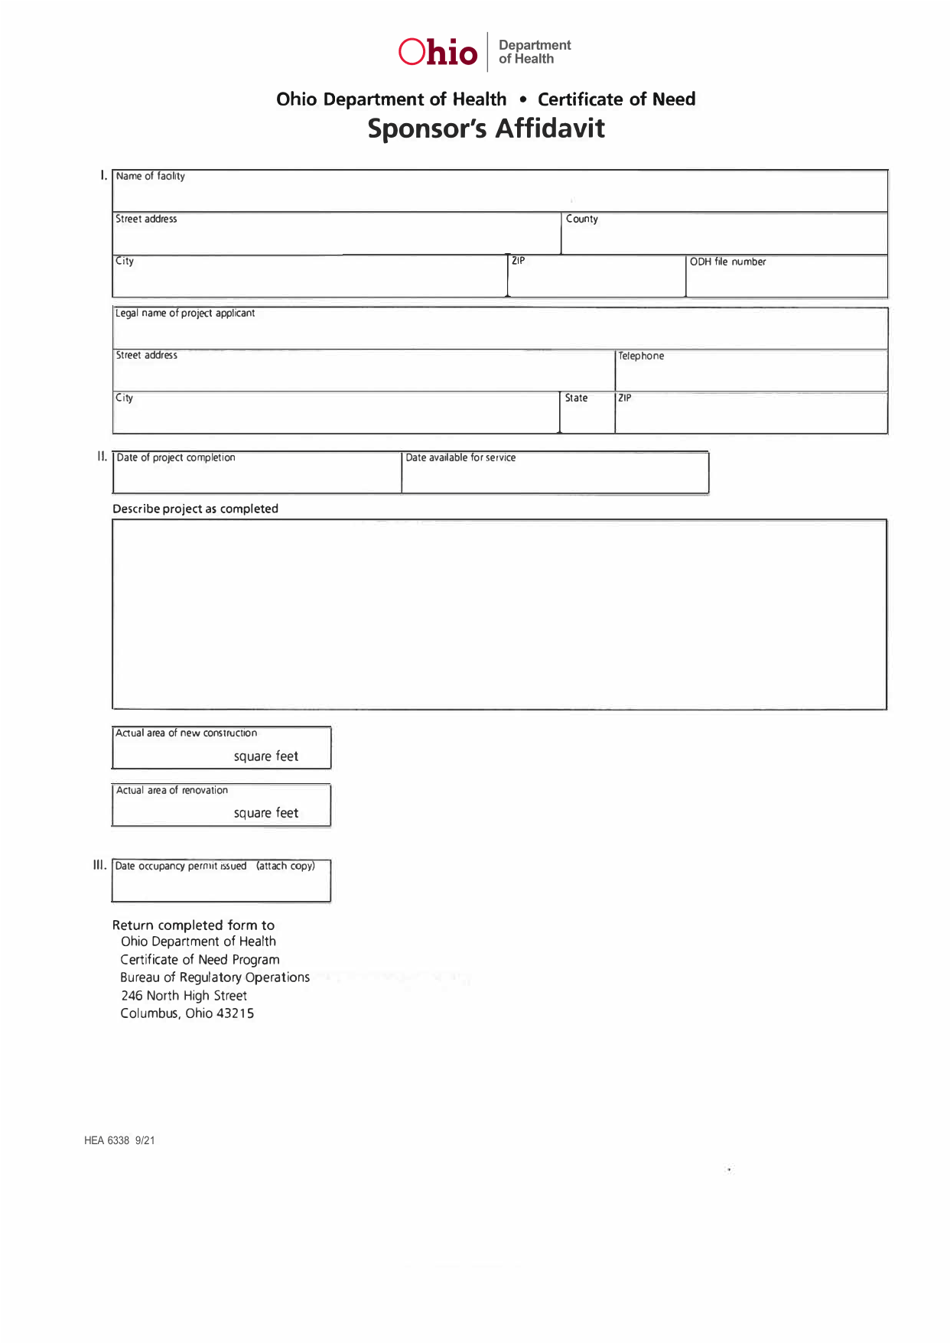 Form HEA6338 Certificate of Need Sponsors Affidavit - Ohio, Page 1